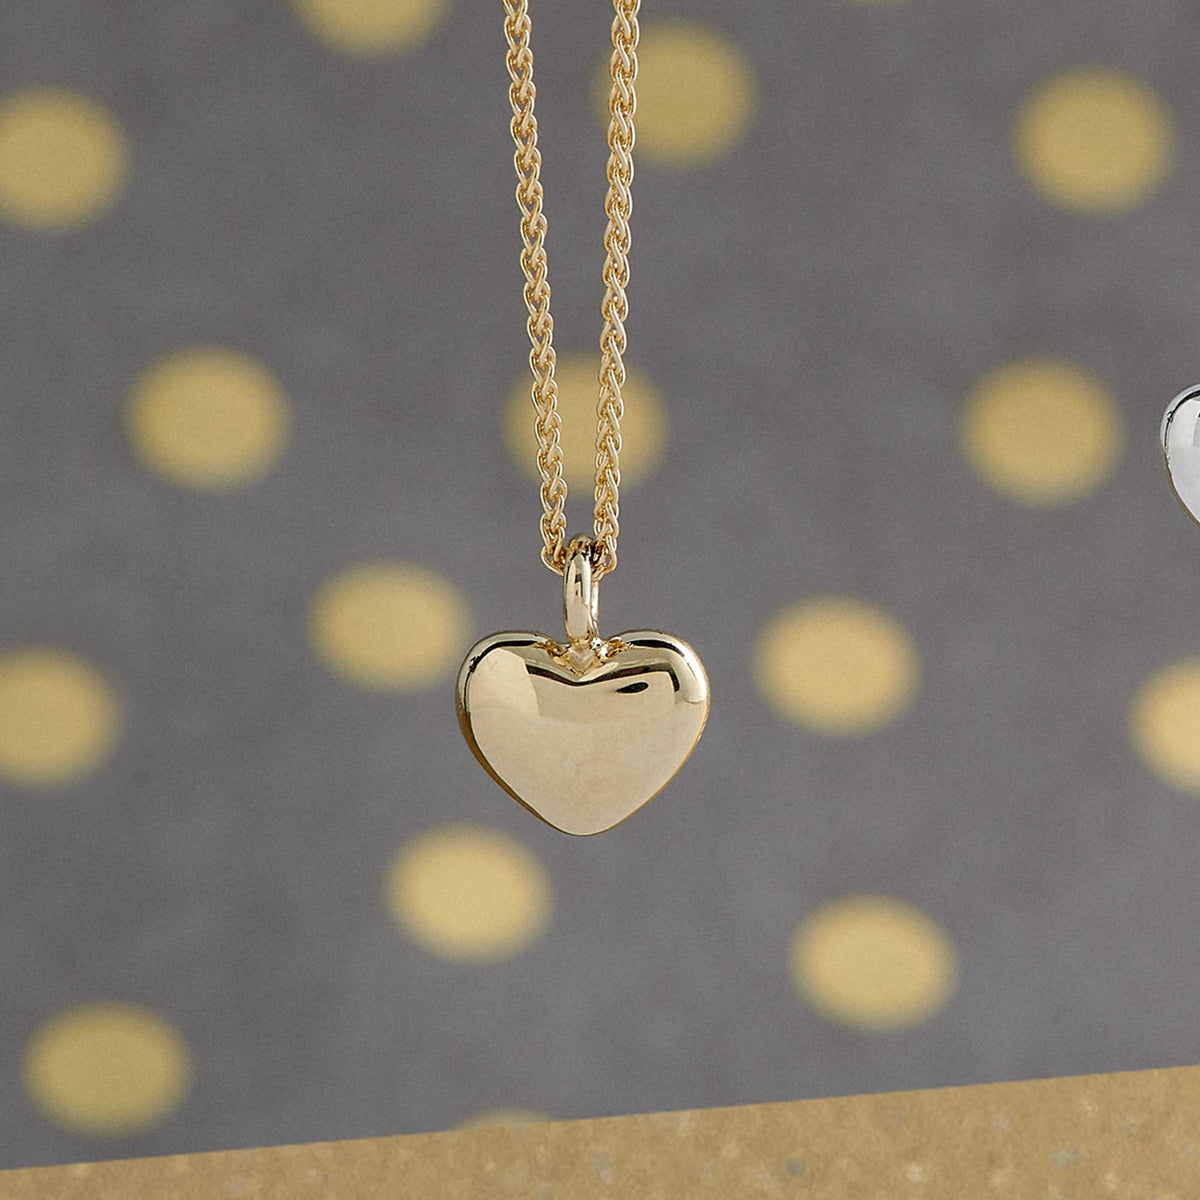 solid gold heart necklace pendant scarlett jewellery uk Brighton